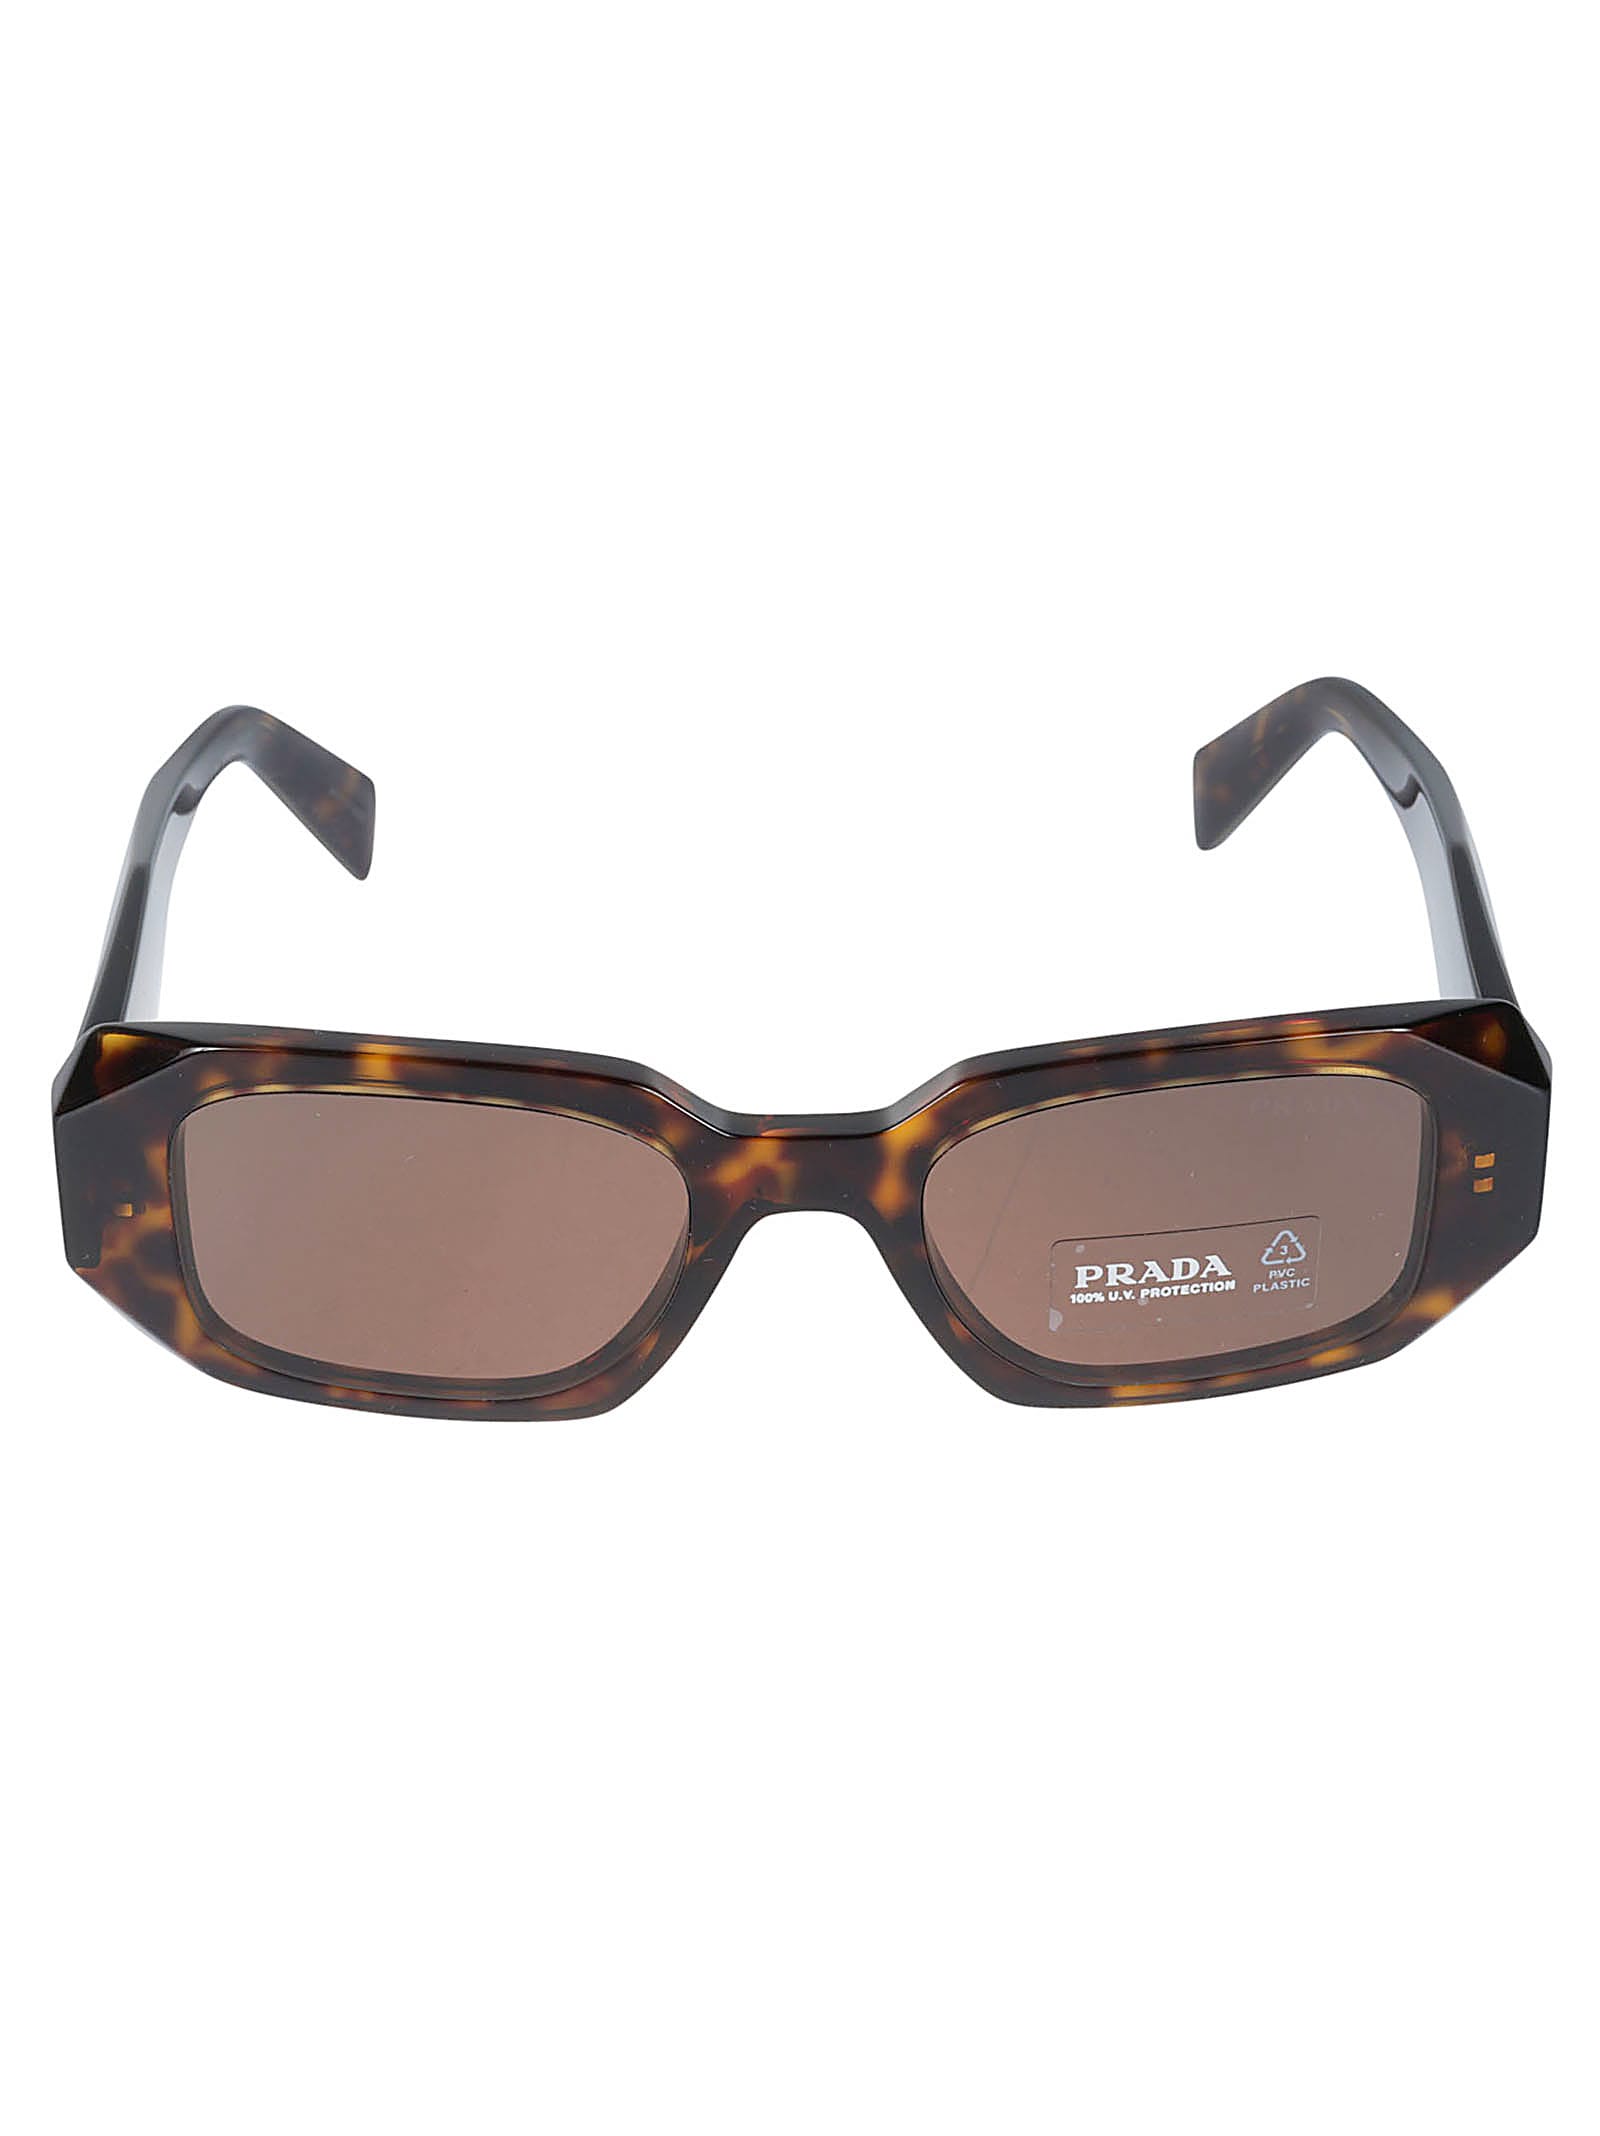 Shop Prada Scultoreo Sunglasses